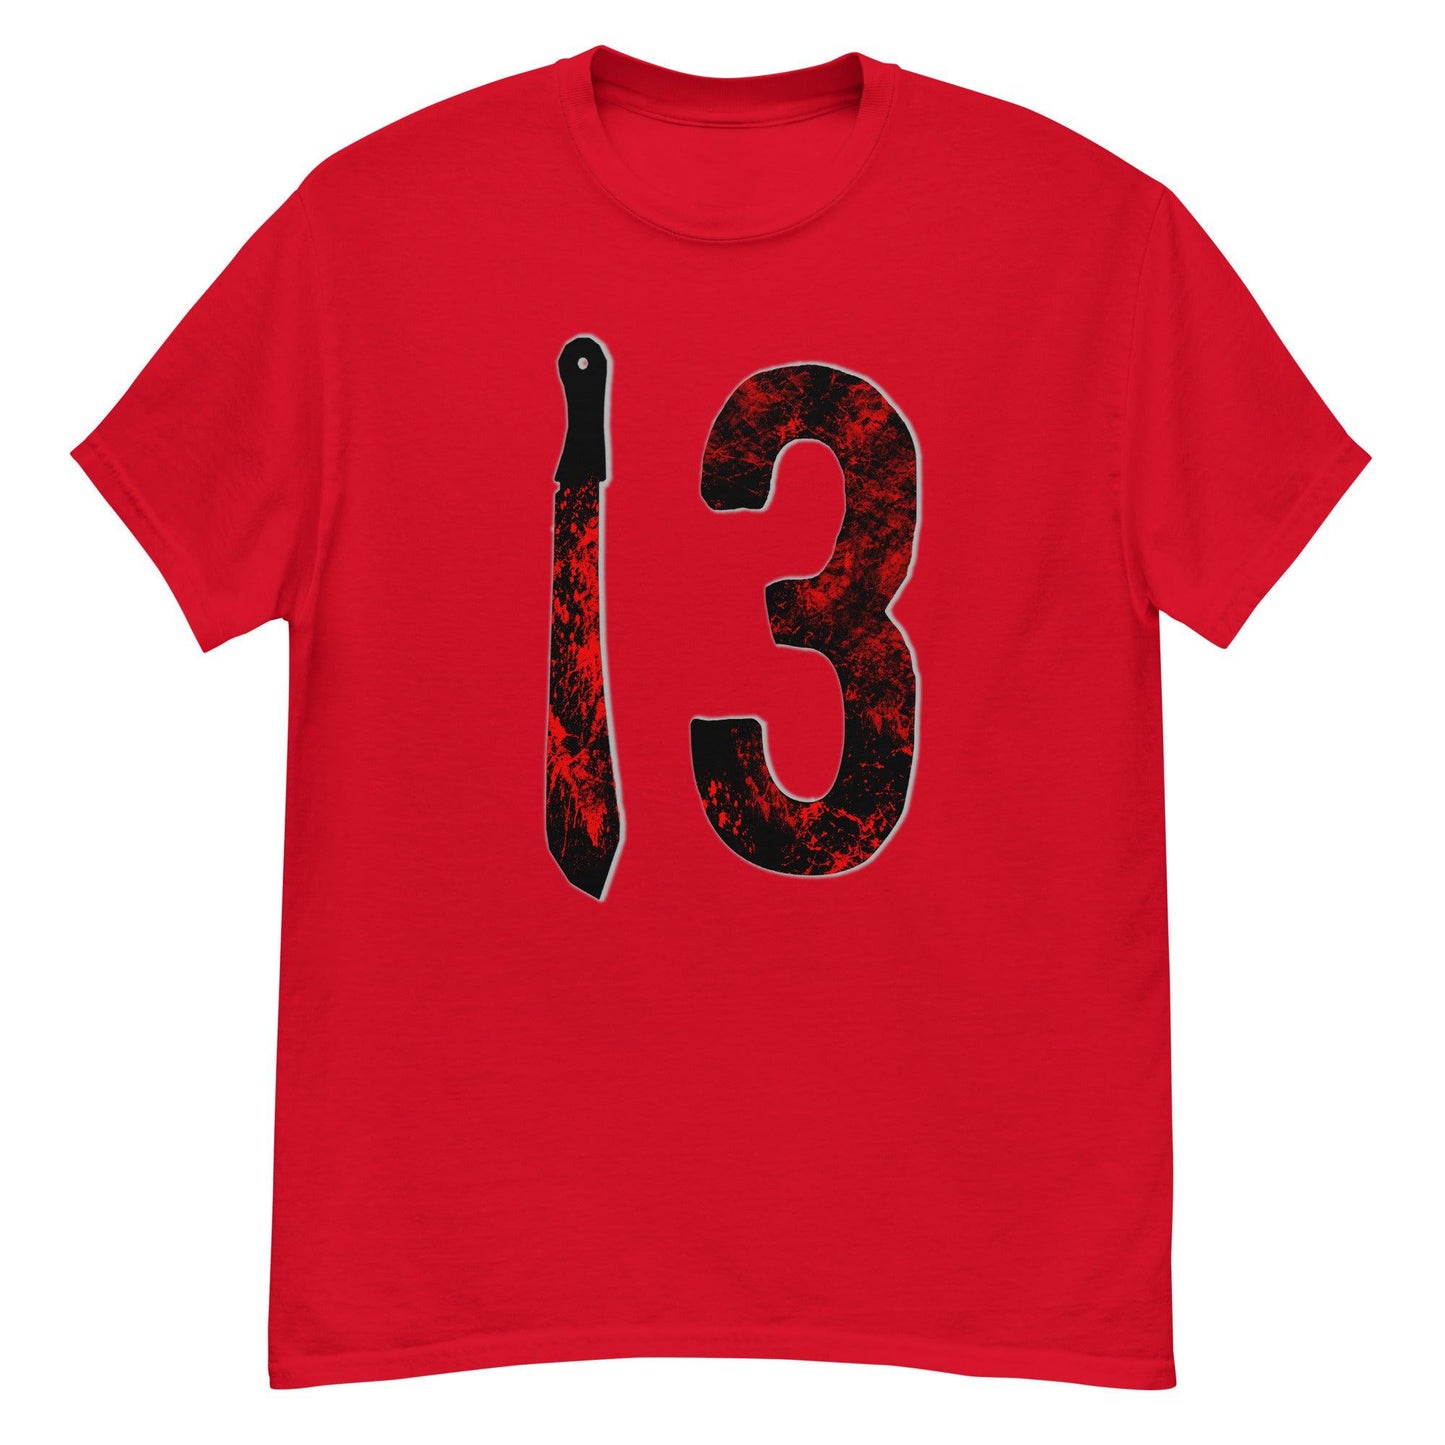 Scar Design T shirt Red / S Friday Horror T-shirt